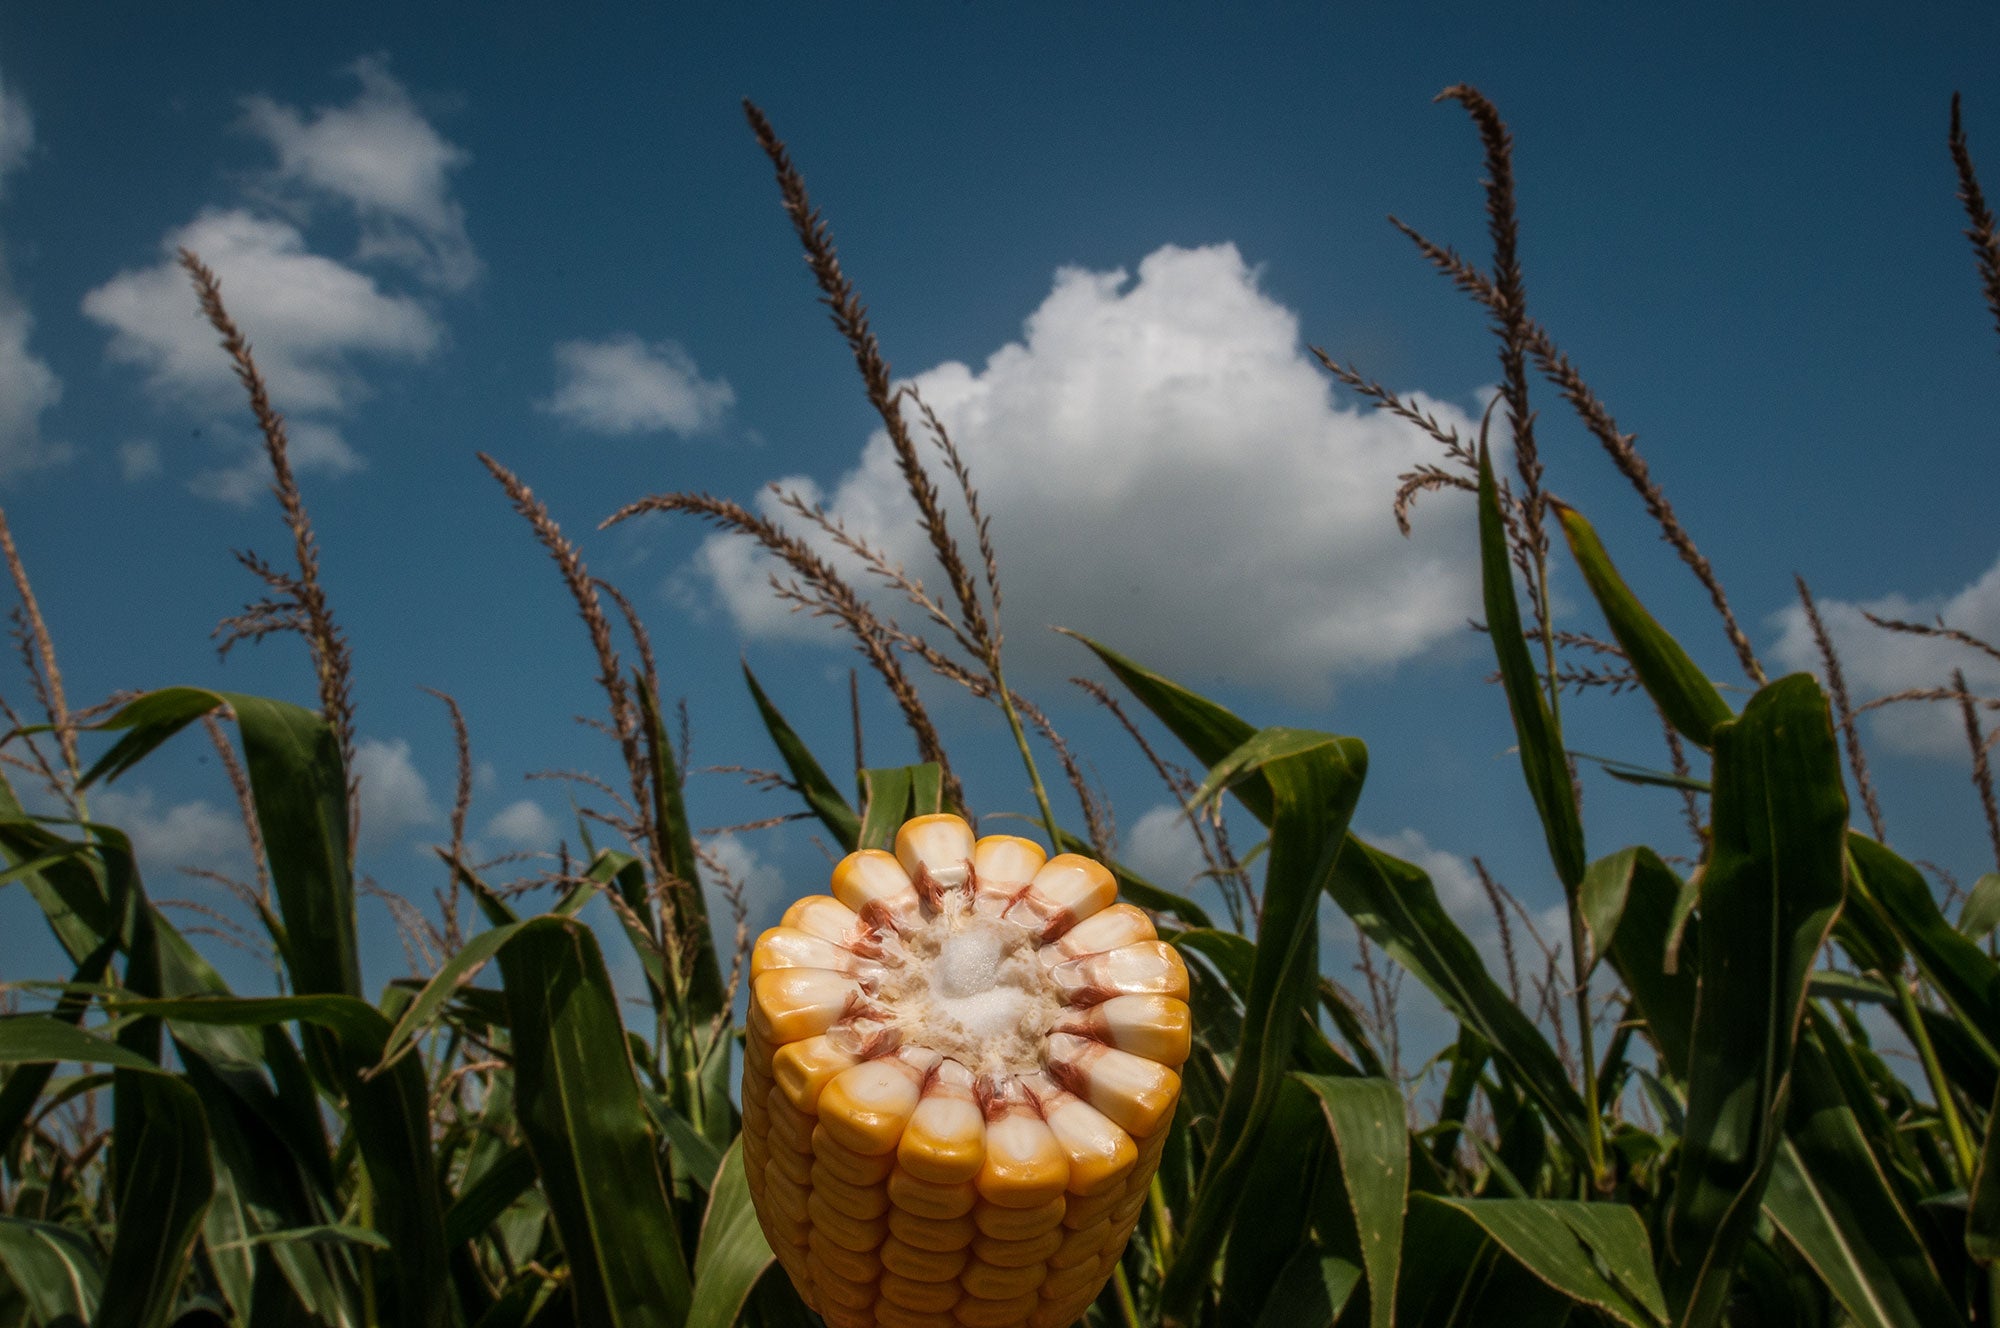 A cross-section of a corn cob in a corn field in Wharton County, TX.